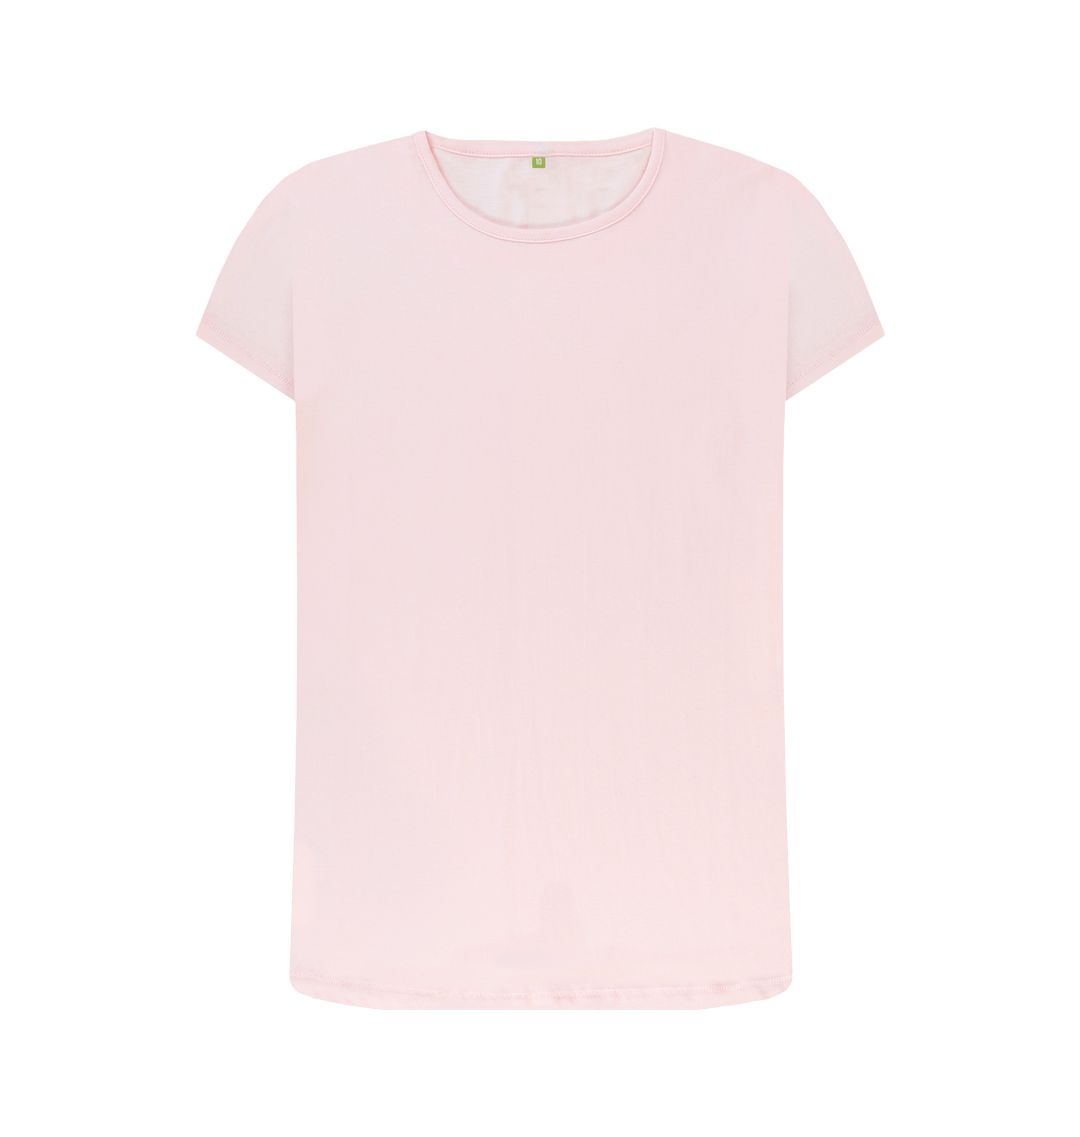 Pink Women's organic cotton crew neck t-shirt